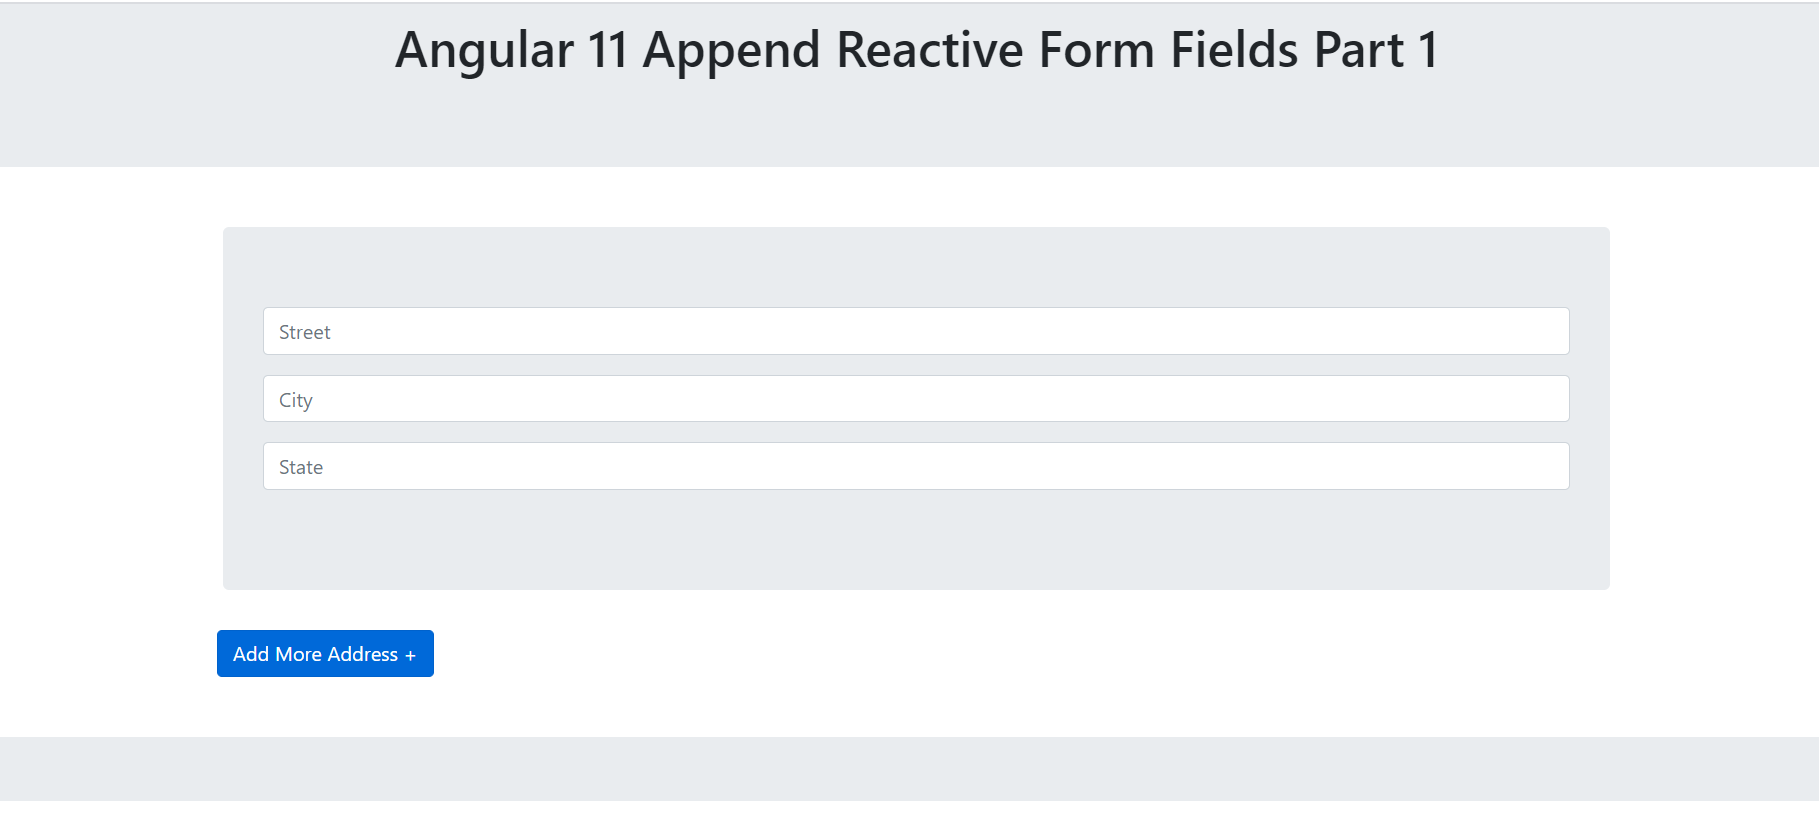 Angular 11 Append Reactive Form Fields Part 1